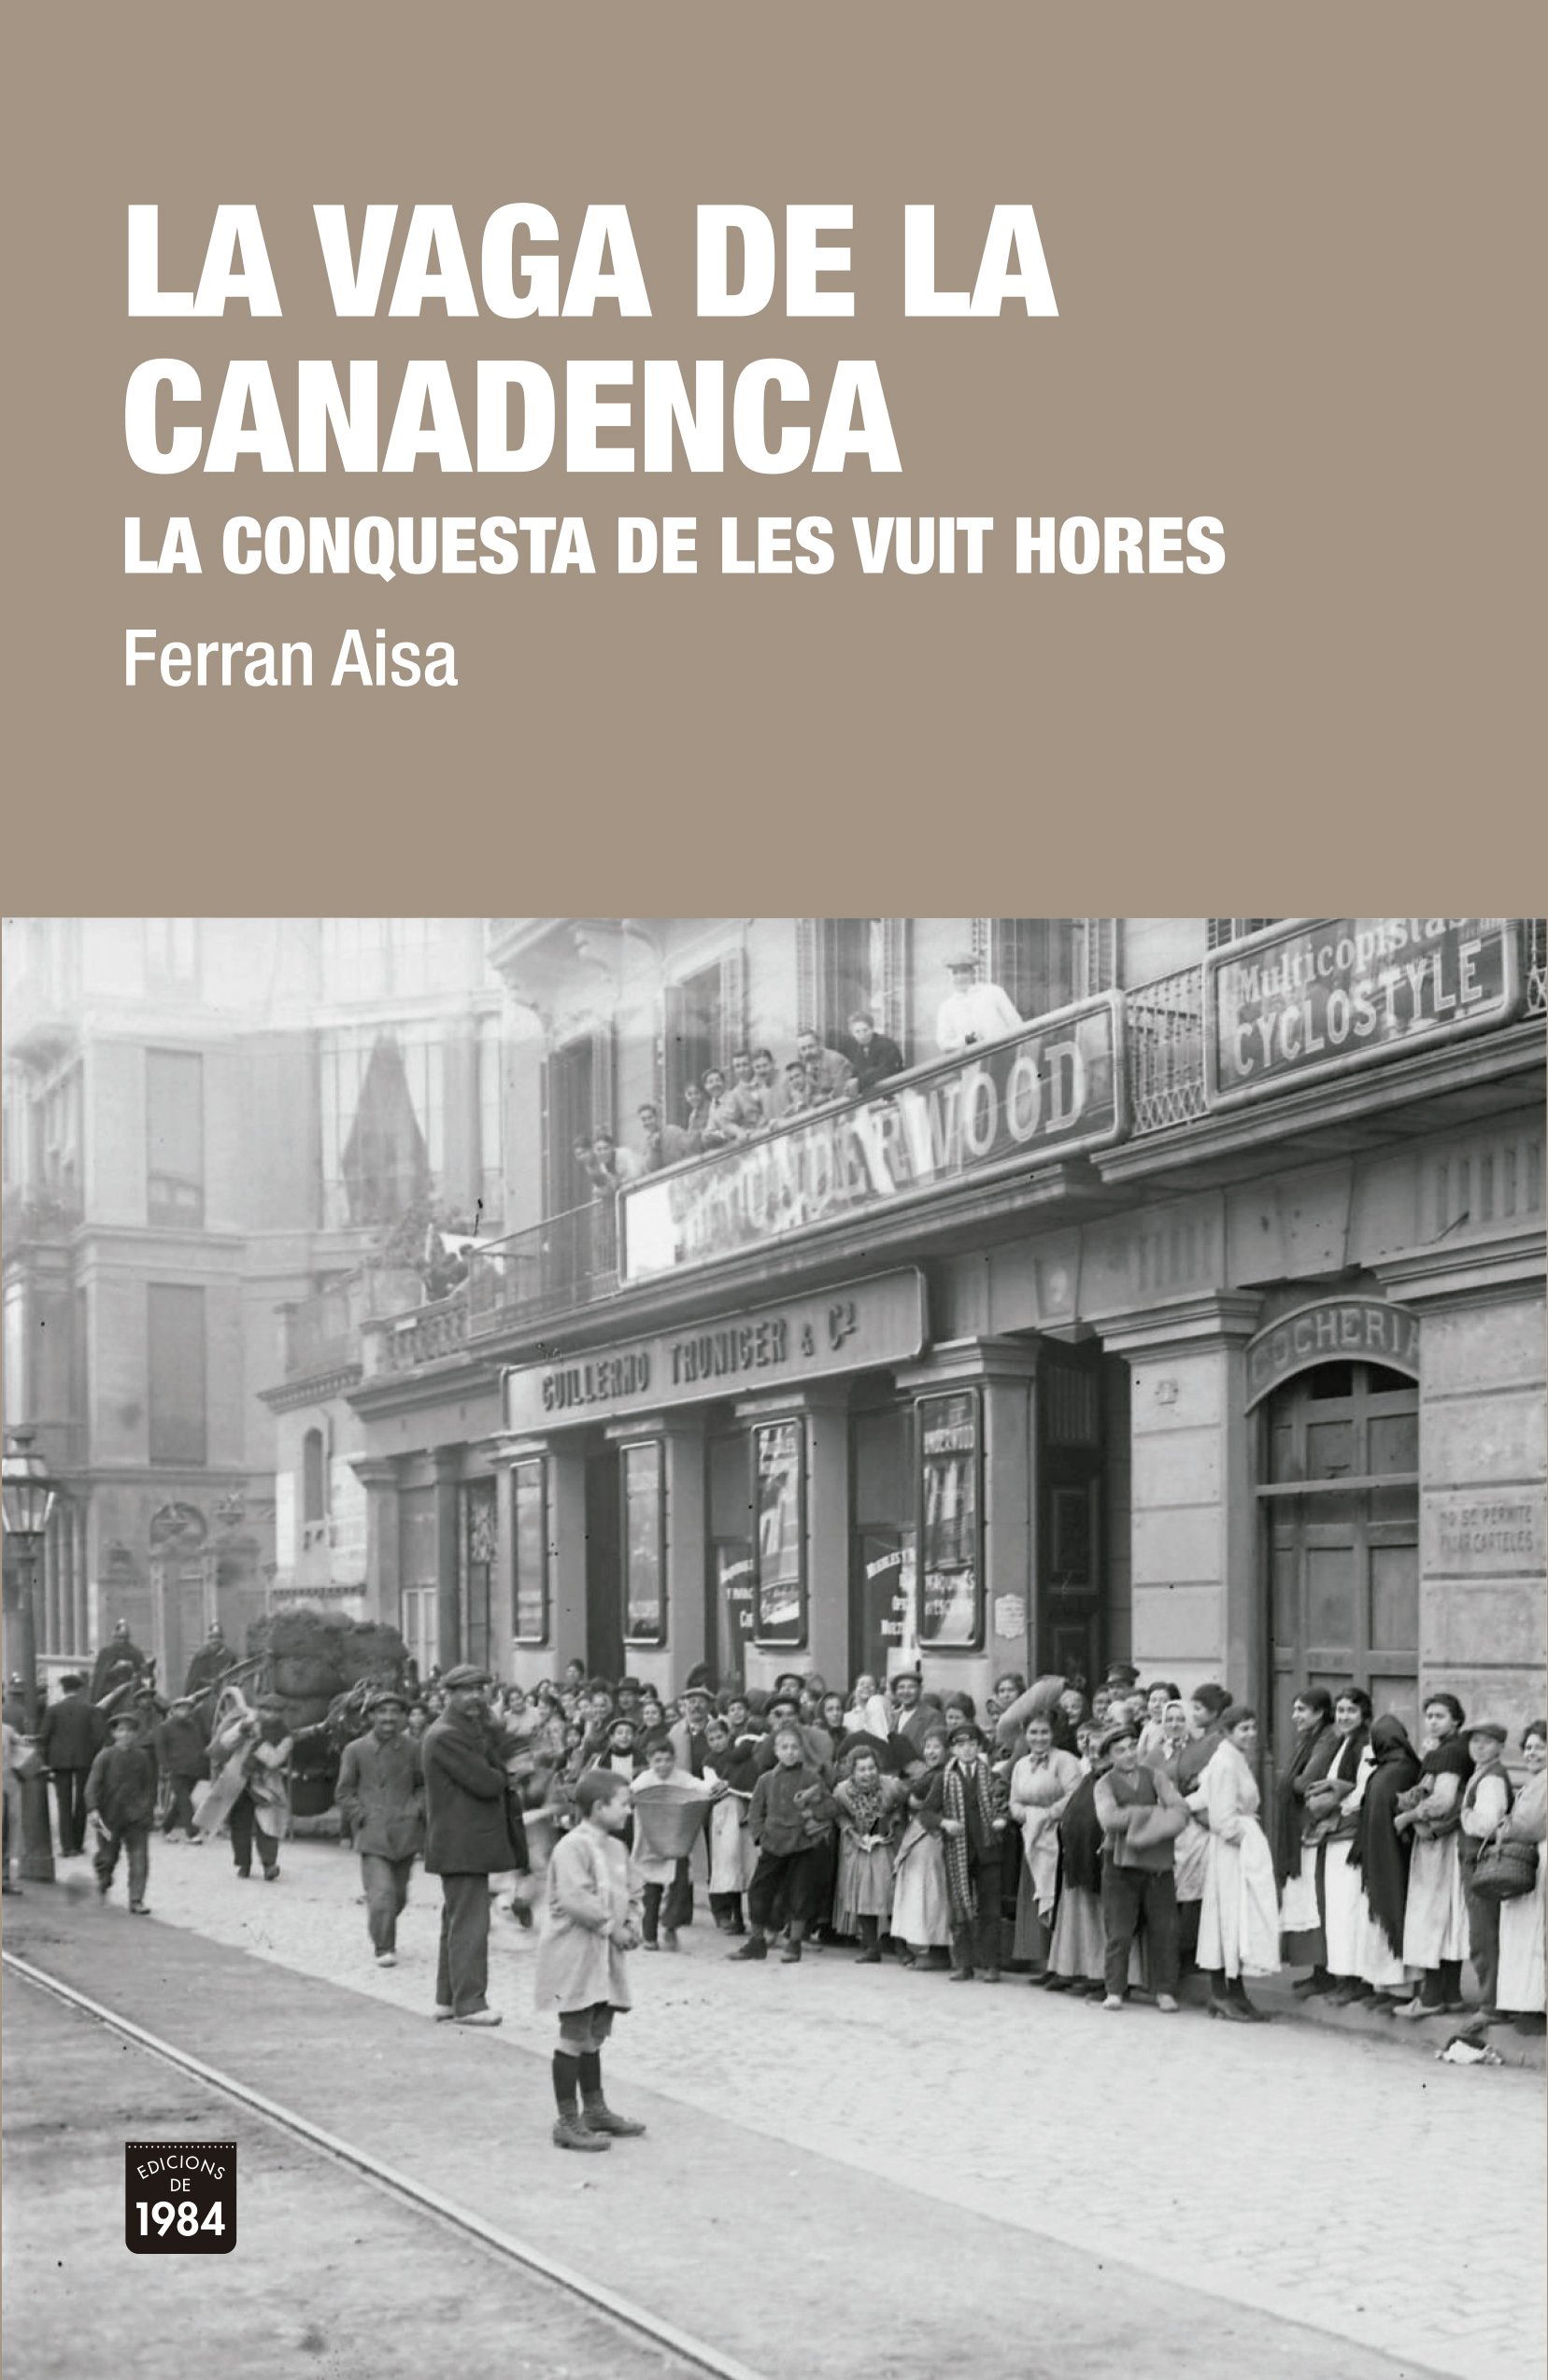 Ferran Aisa, 'La vaga de la Canadenca'. Edicions de 1984, 320 p., 20 €.